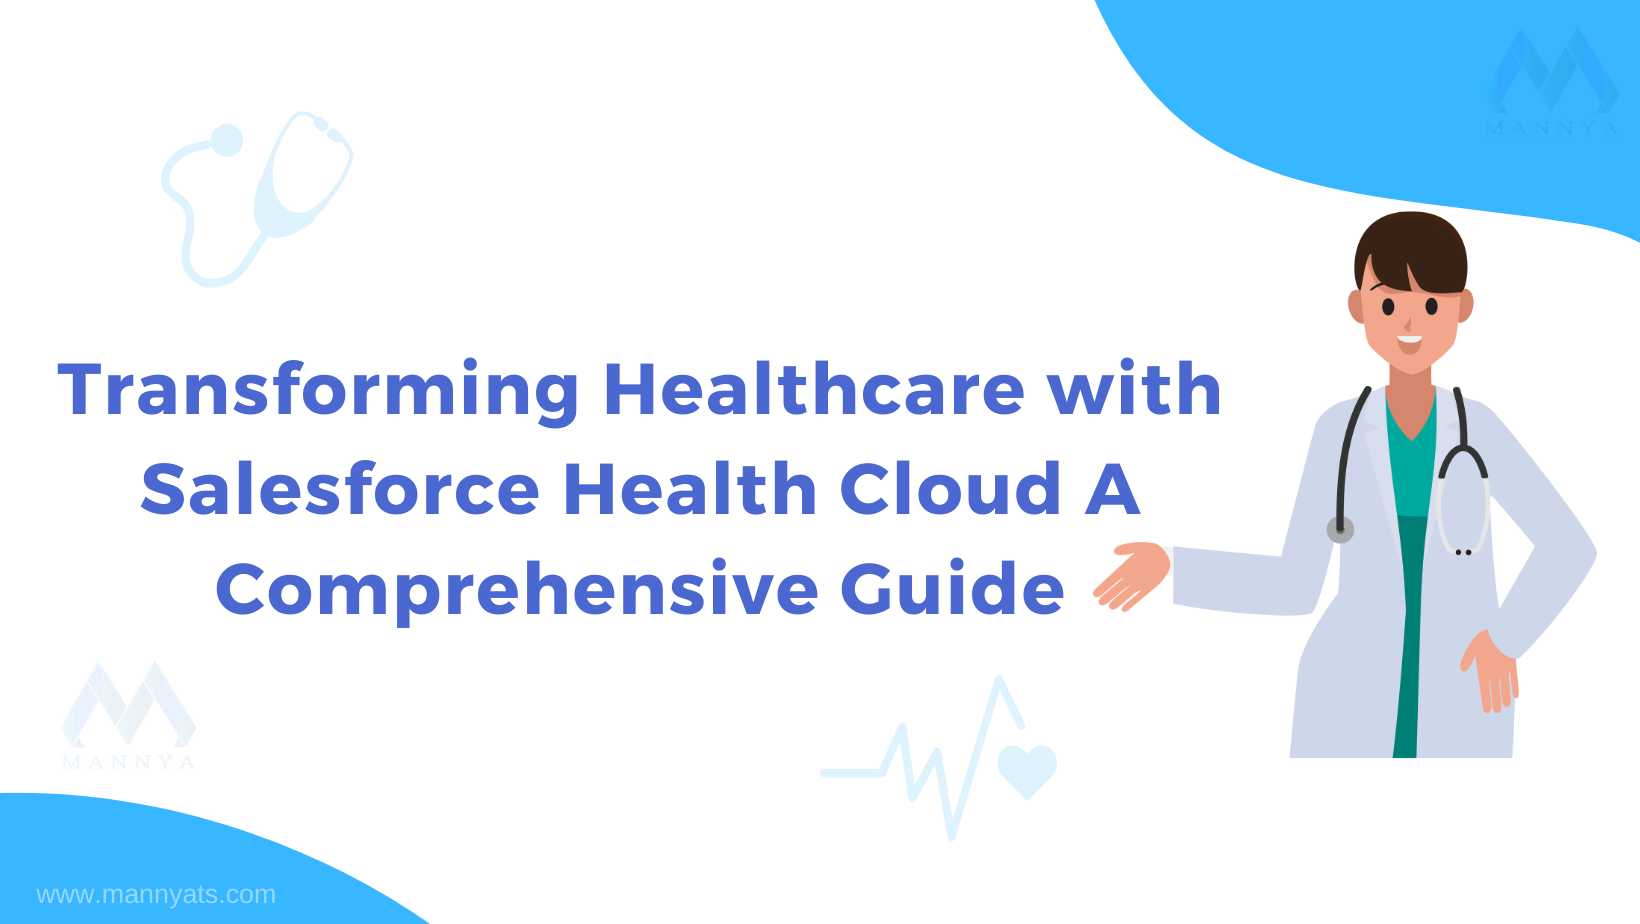 Salesforce Health Cloud A Comprehensive Guide